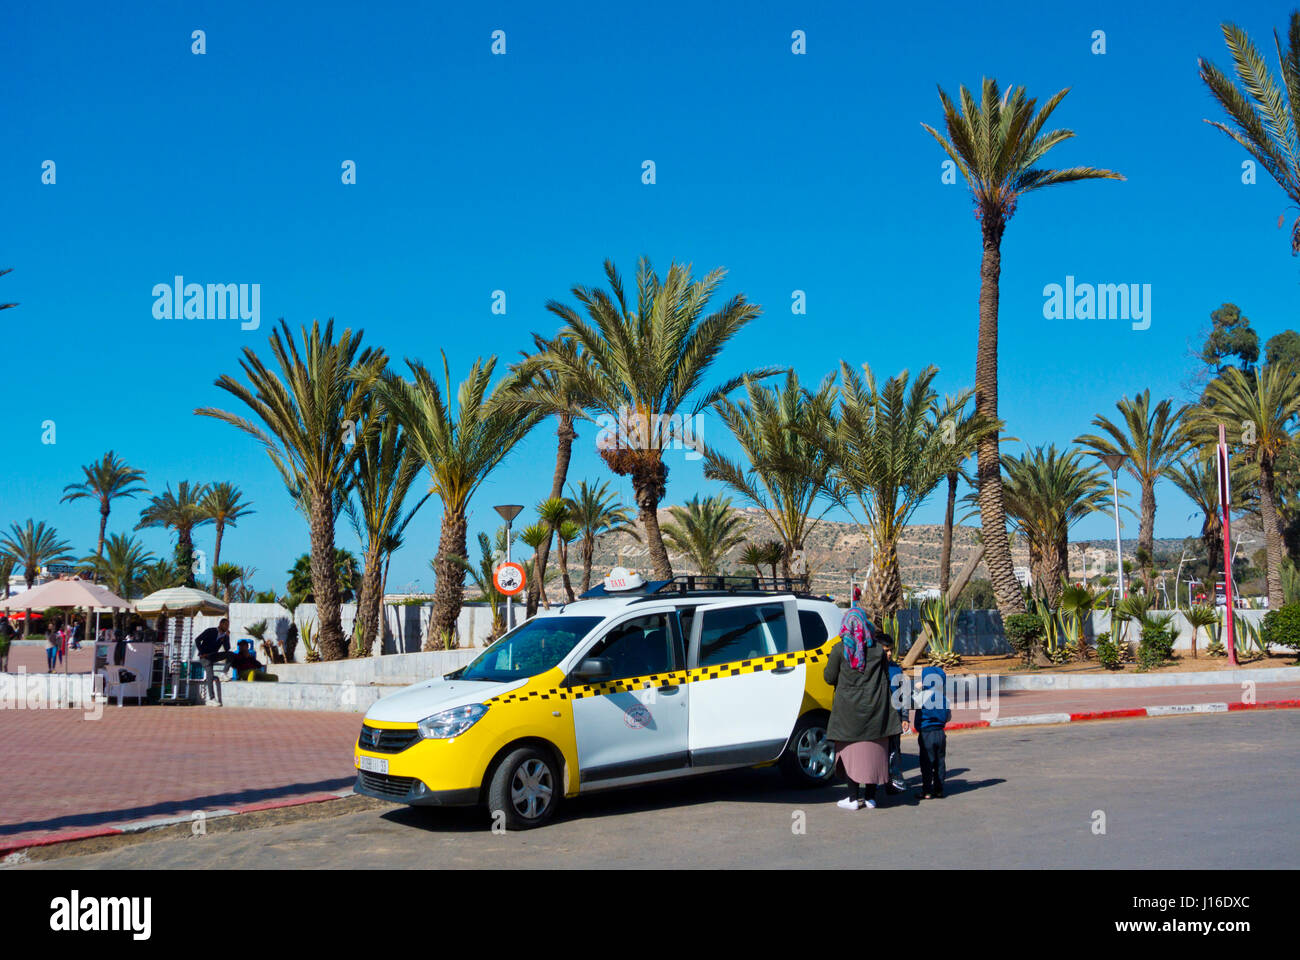 Grand taxi and morocco -Fotos und -Bildmaterial in hoher Auflösung – Alamy